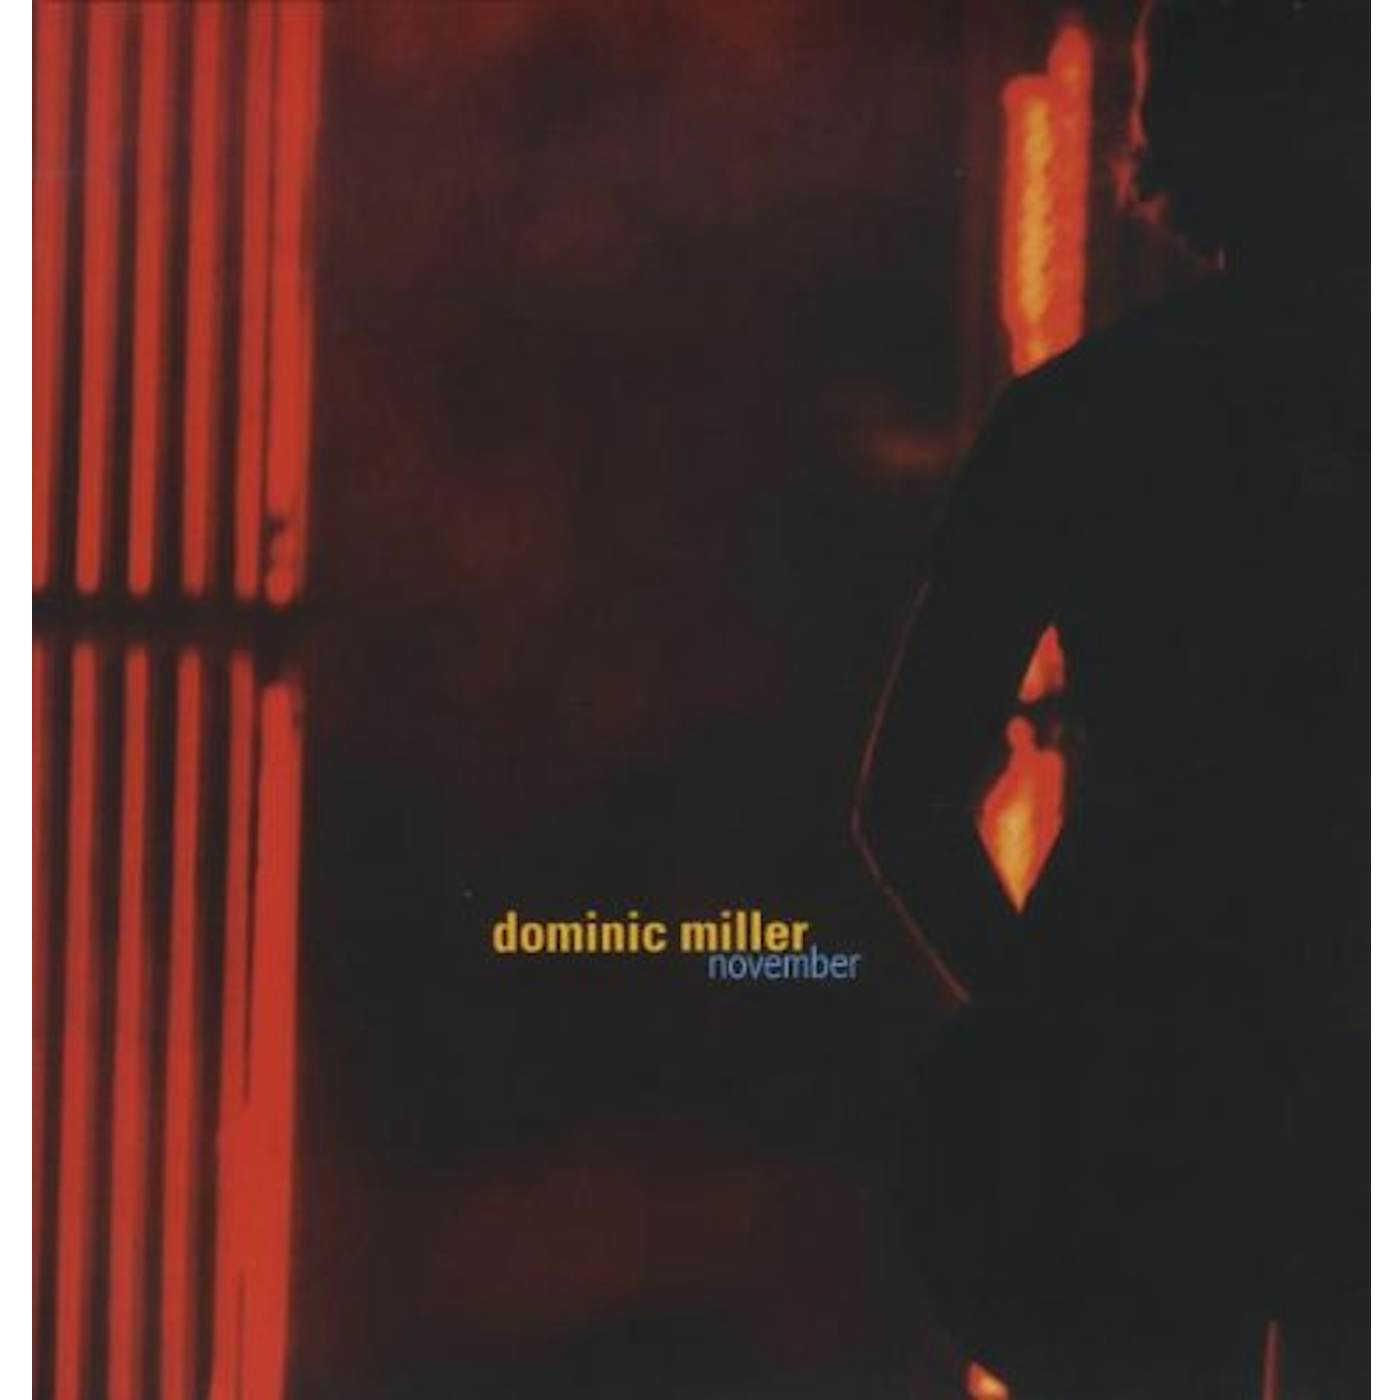 Dominic Miller November Vinyl Record